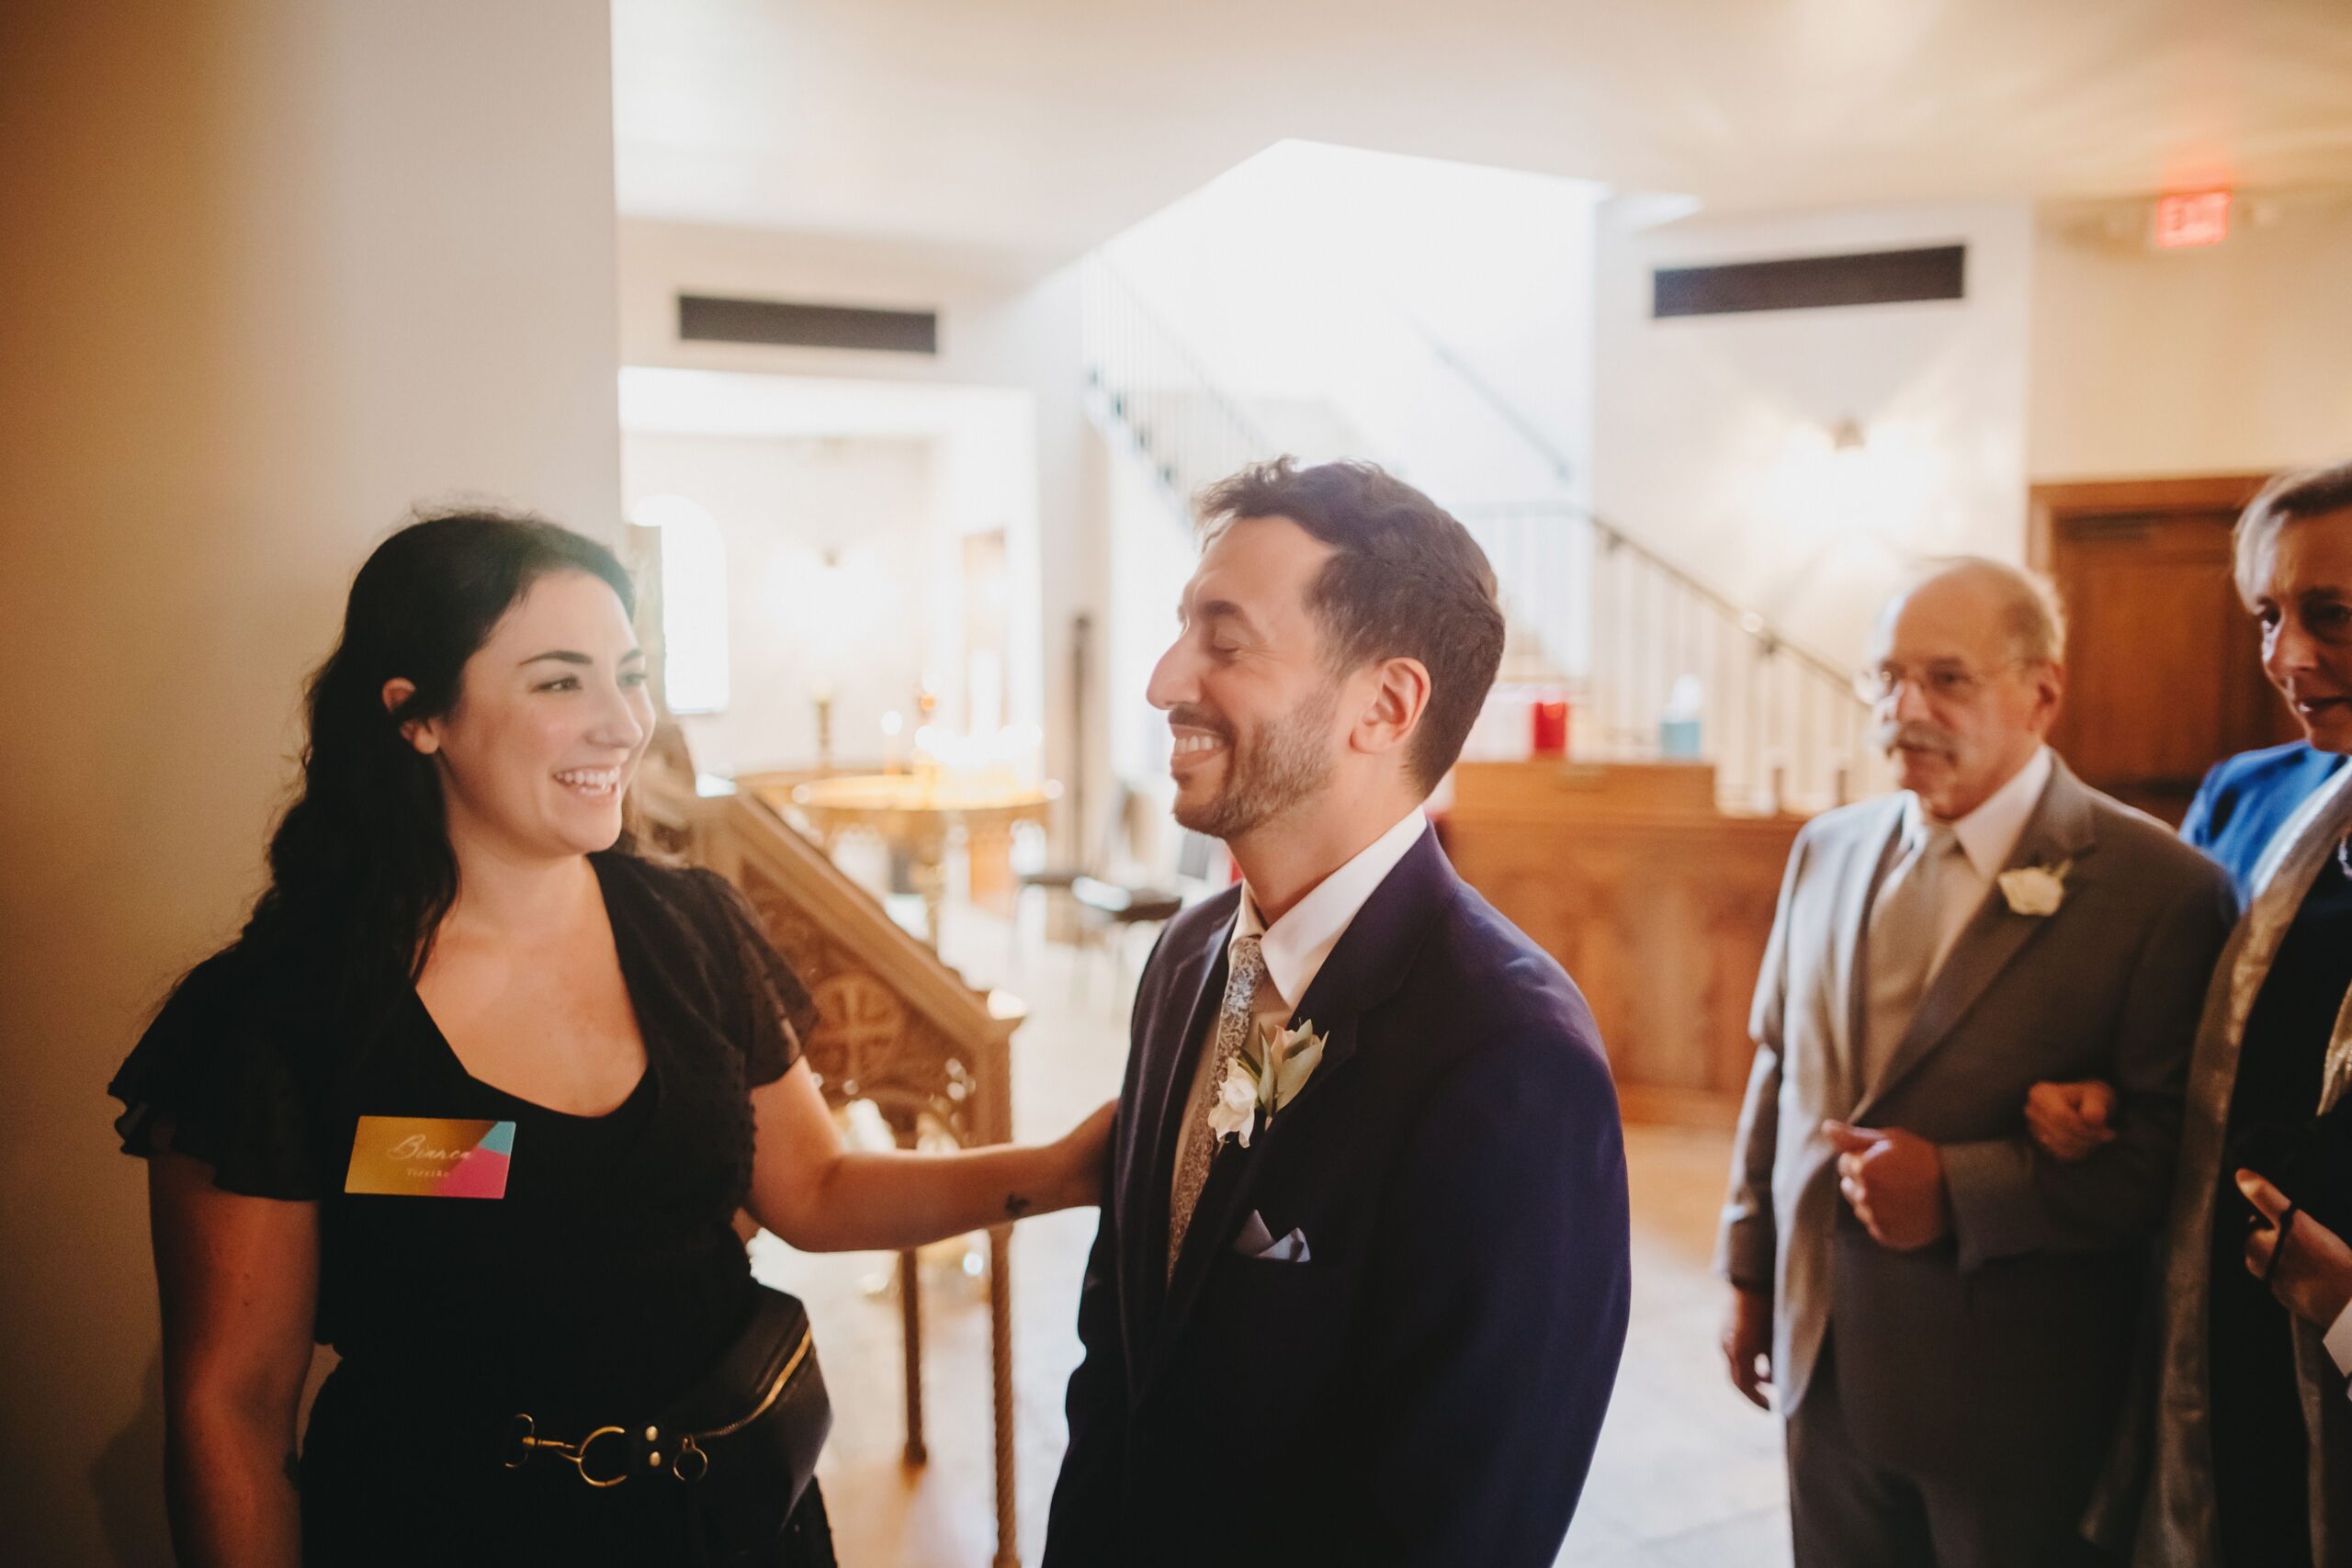 Wedding planner congratulating groom before he walks down the aisle